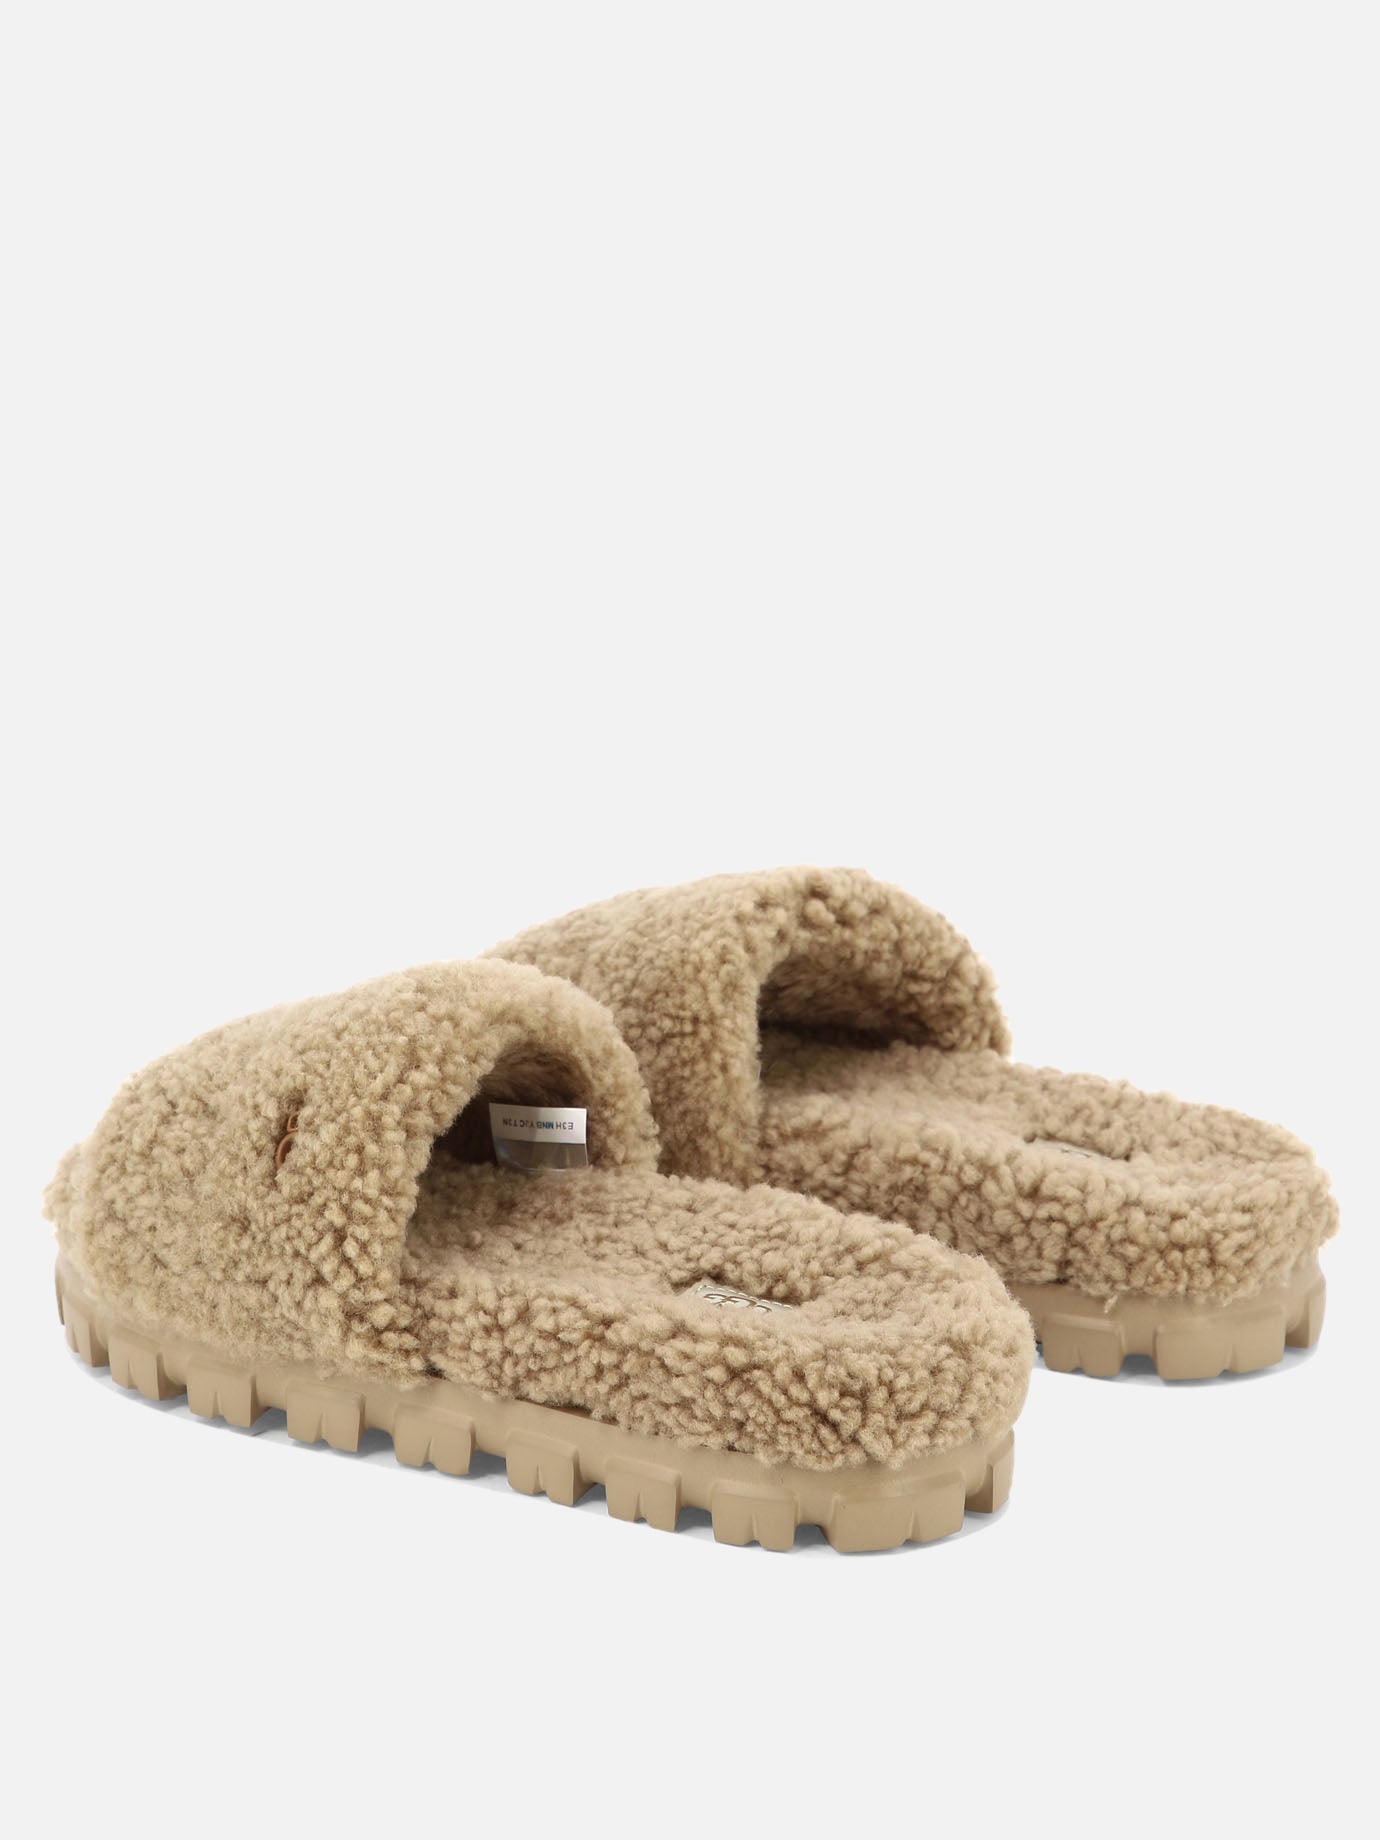 "Cozetta Curly" sandals